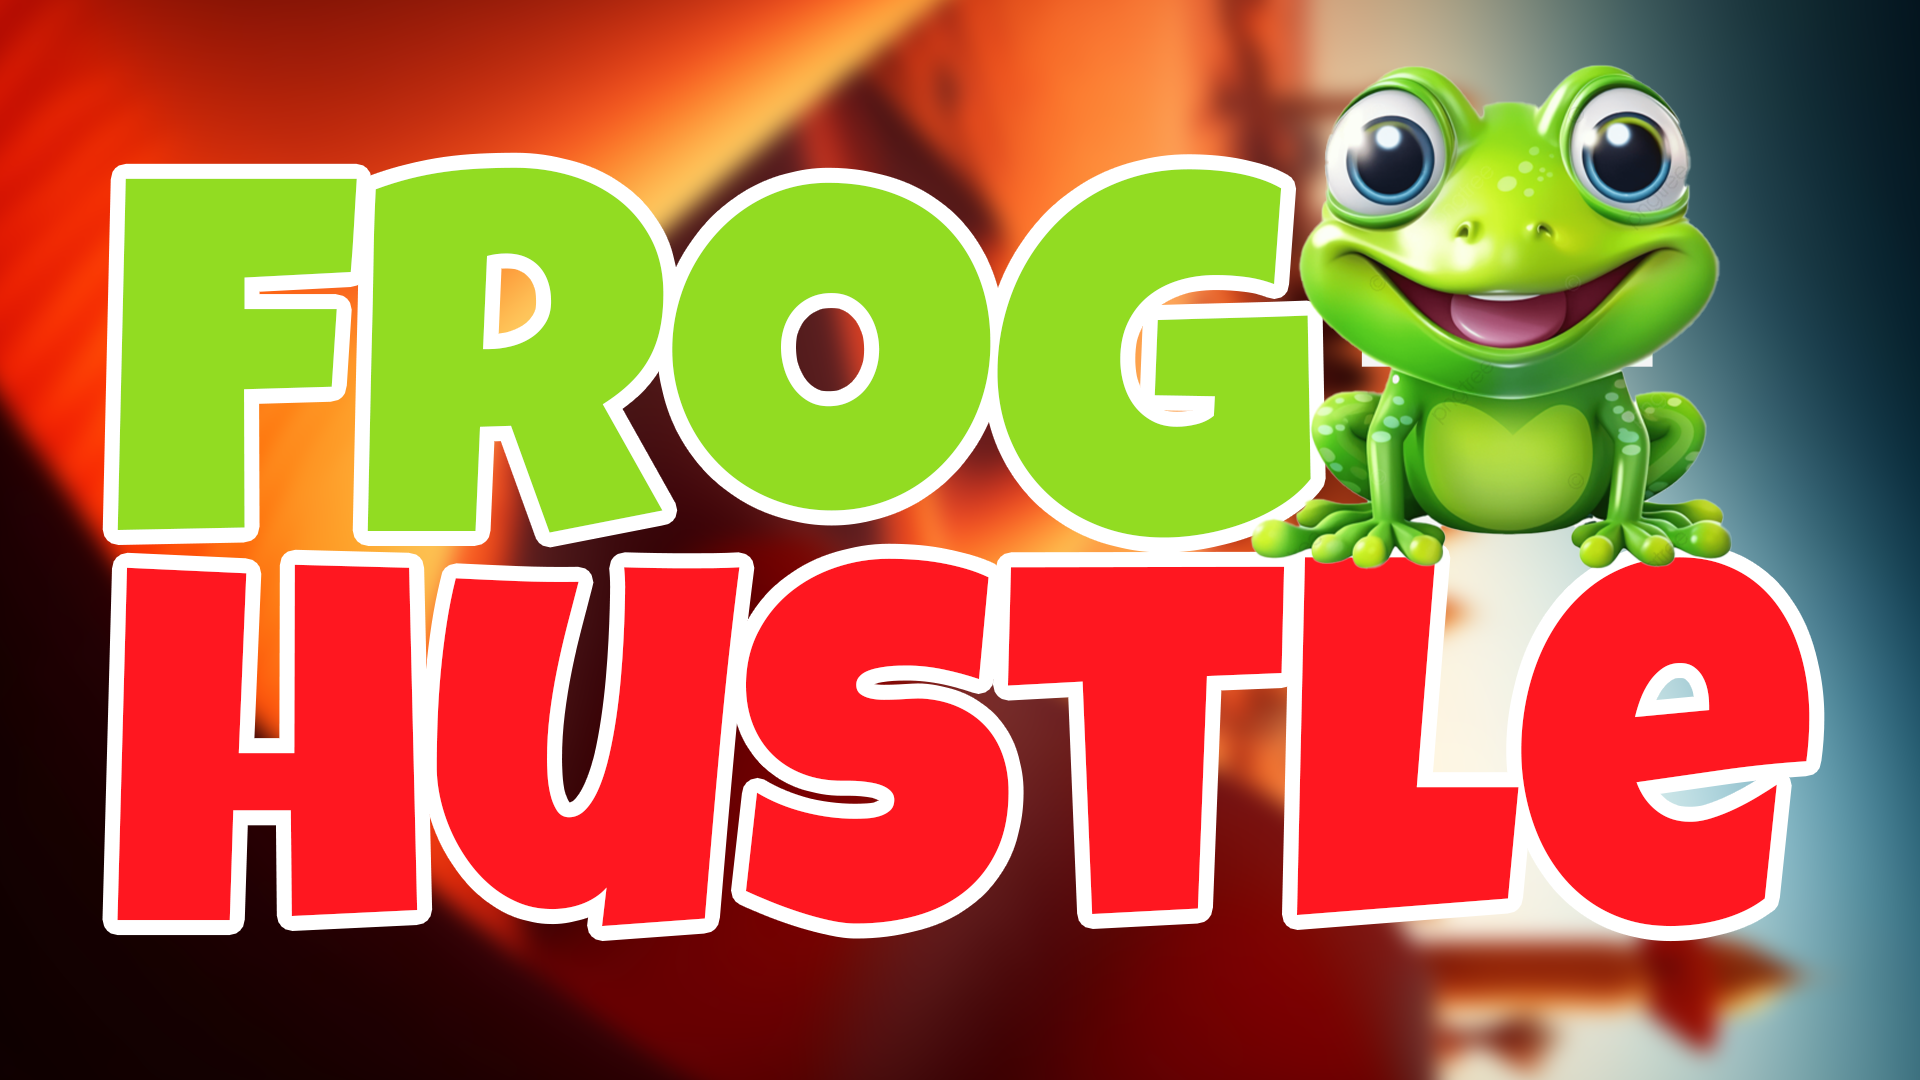 Screenshot 1 of Frog Hustles 1.0